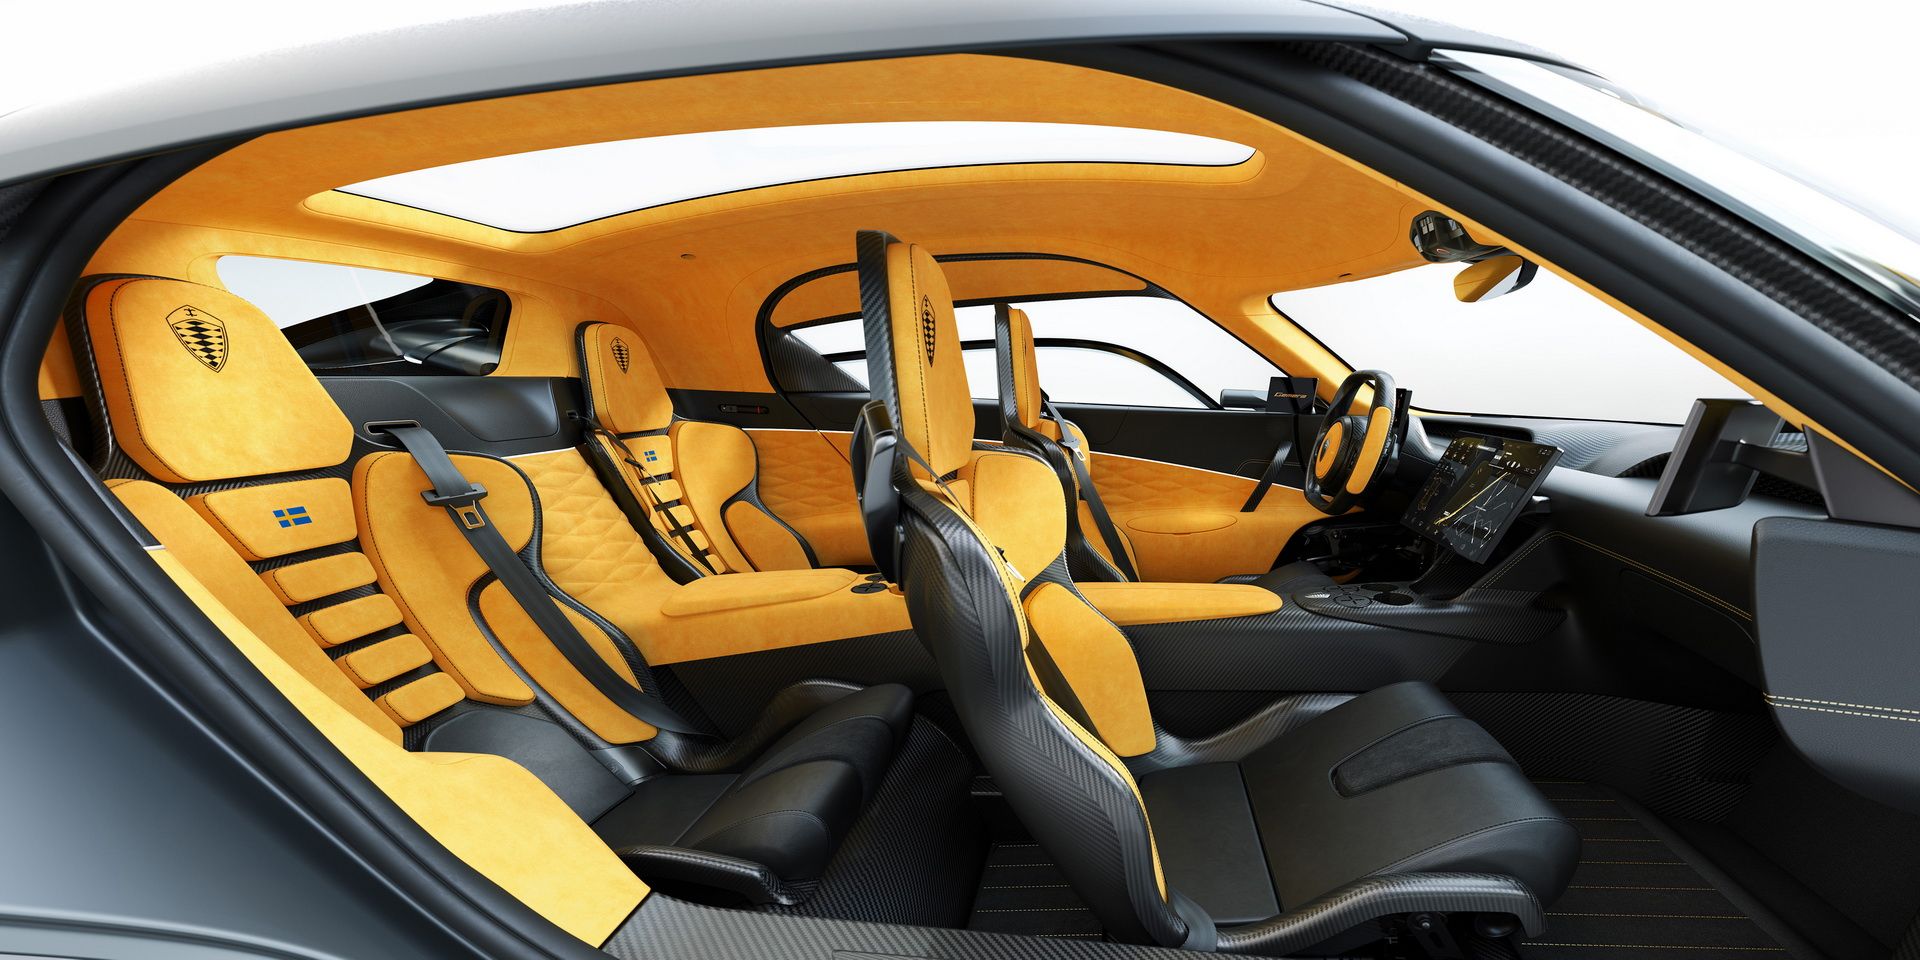 Koenigsegg Gemera GT High Performance Supercar Sports Car Hybrid Track Street Legal Hypercar